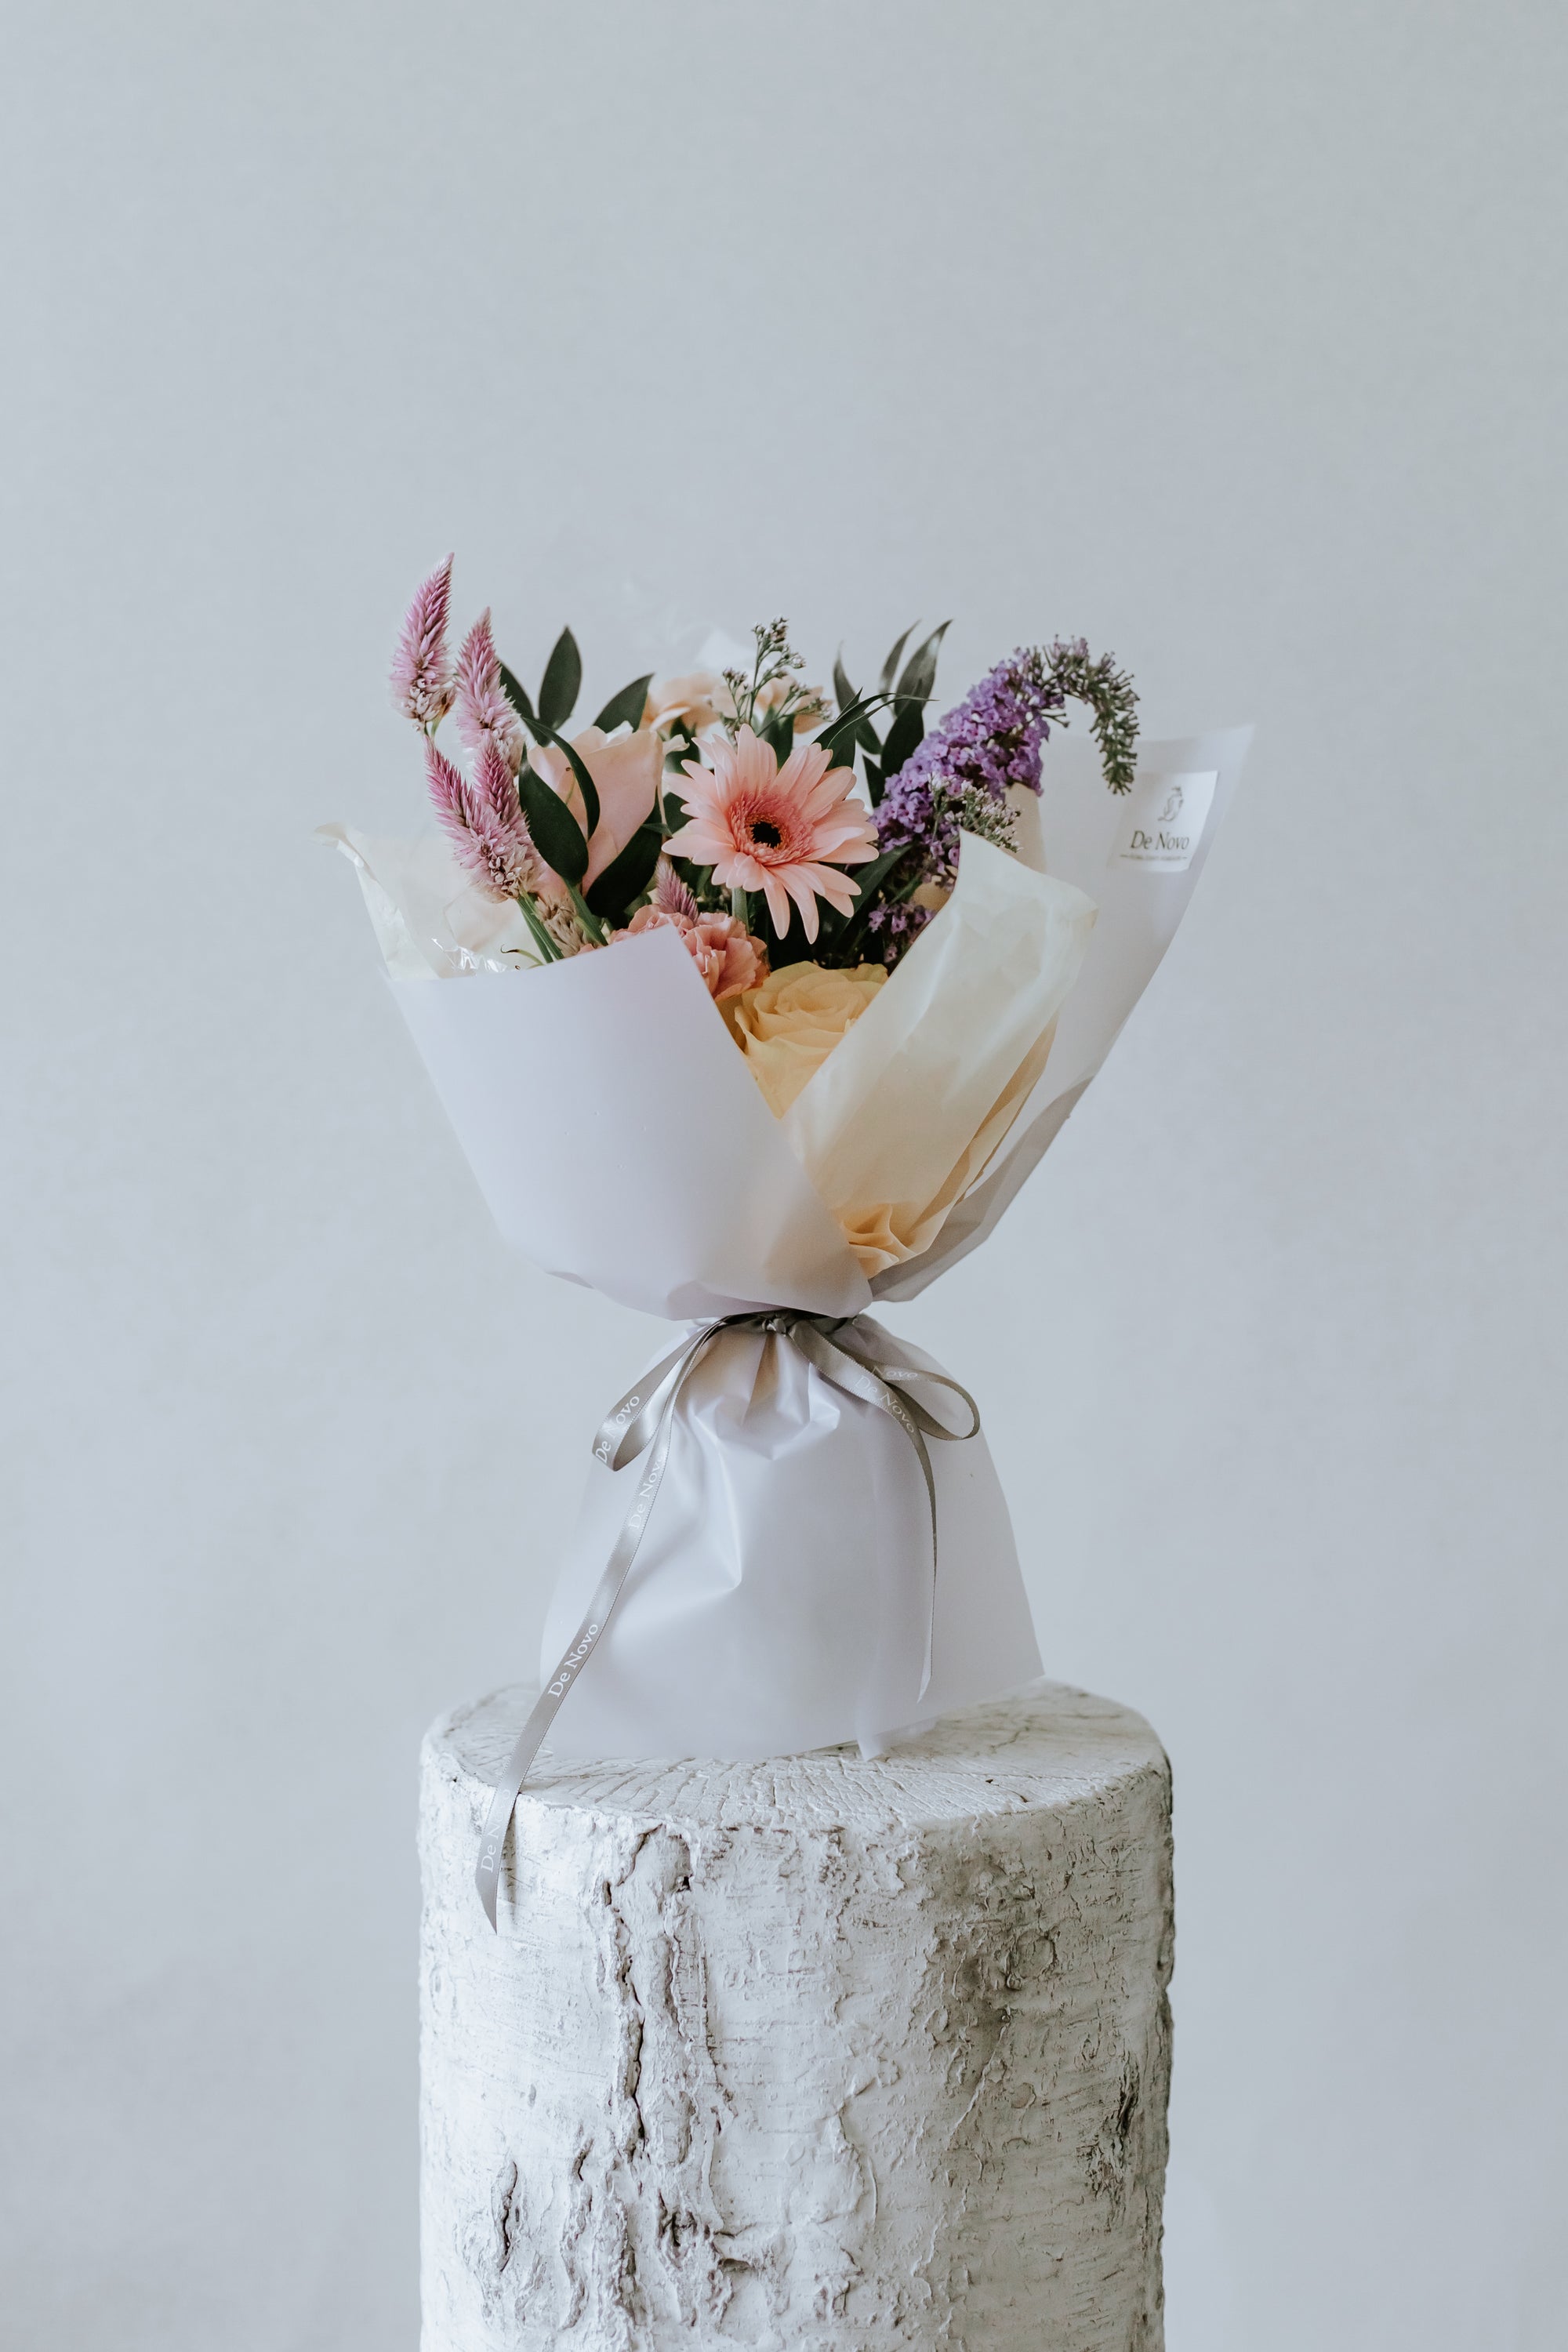 Small Vibrant De Novo Signature Bouquet: Toronto-inspired Vibrant Blooms in Distinguished Layered Woven Wrap